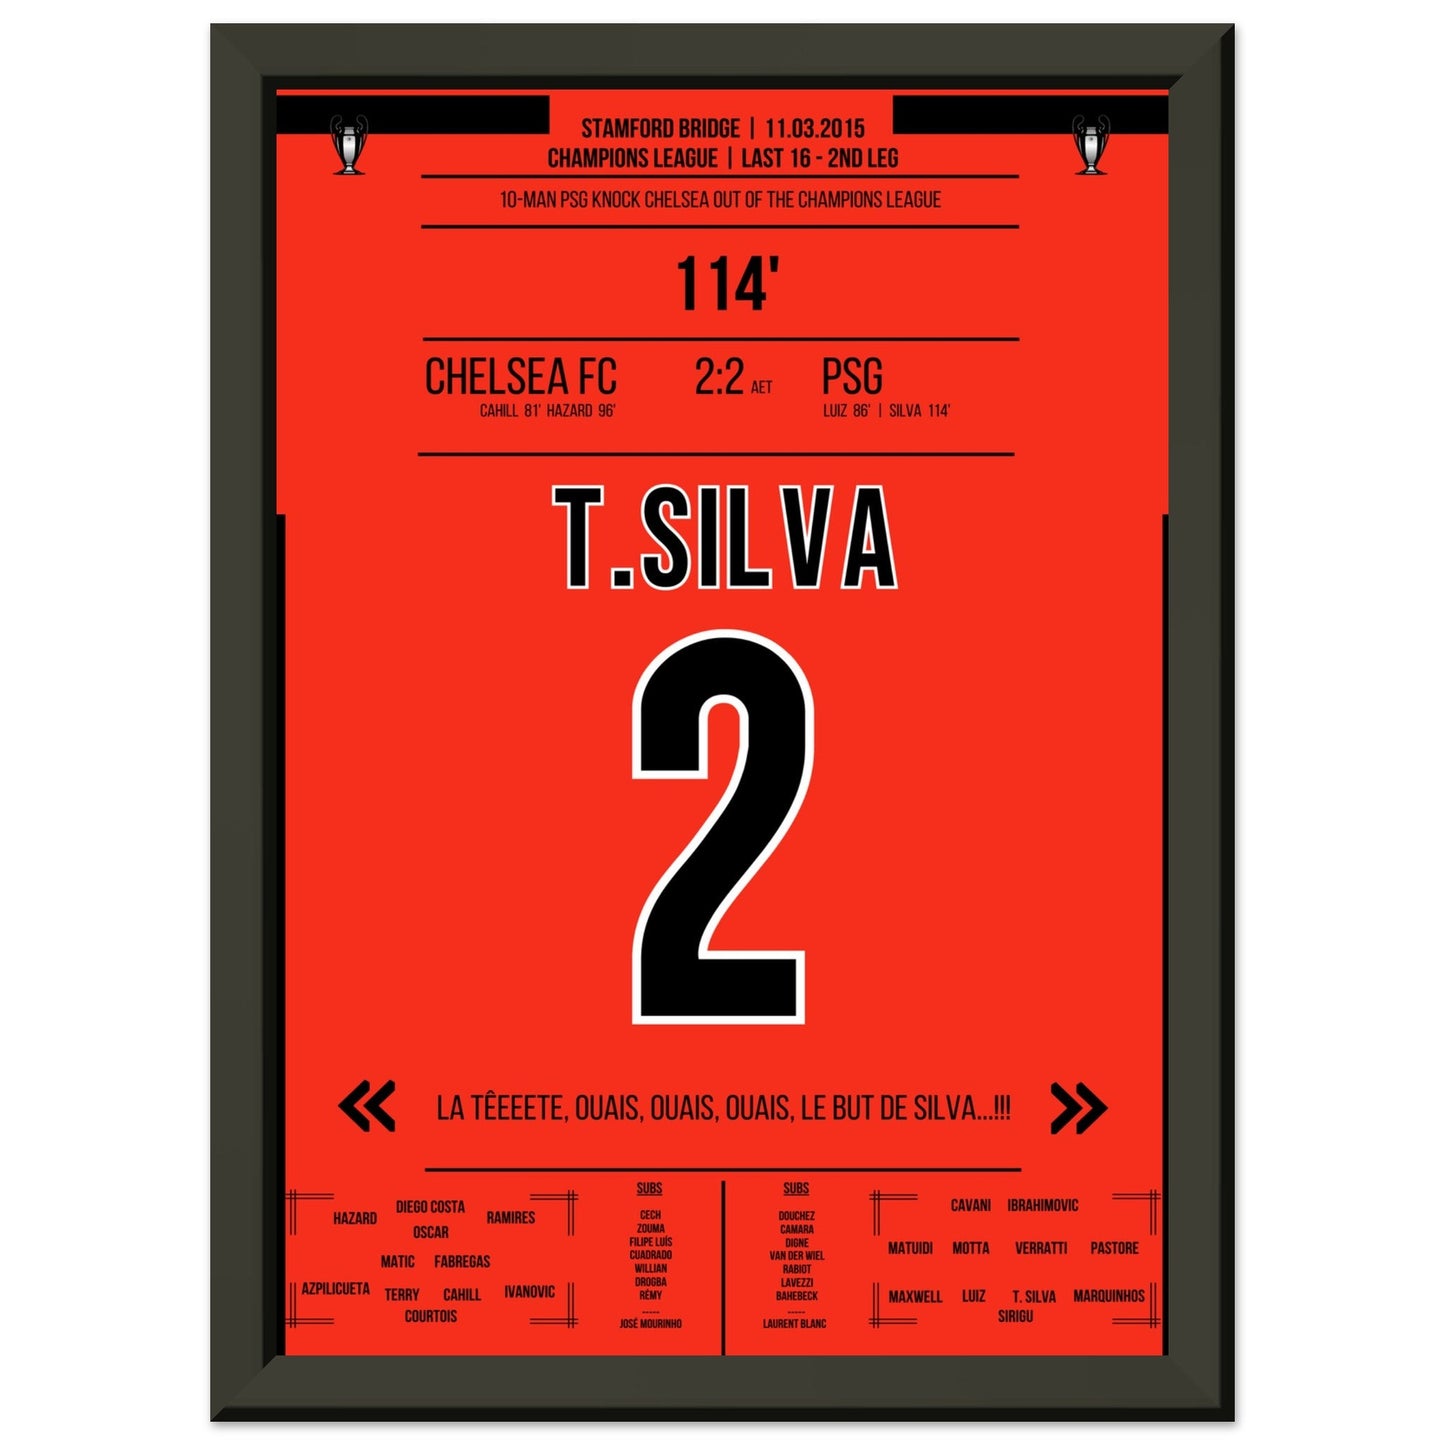 Thiago Silva's entscheidendes Kopfballtor im CL Achtelfinale gegen Chelsea 2015